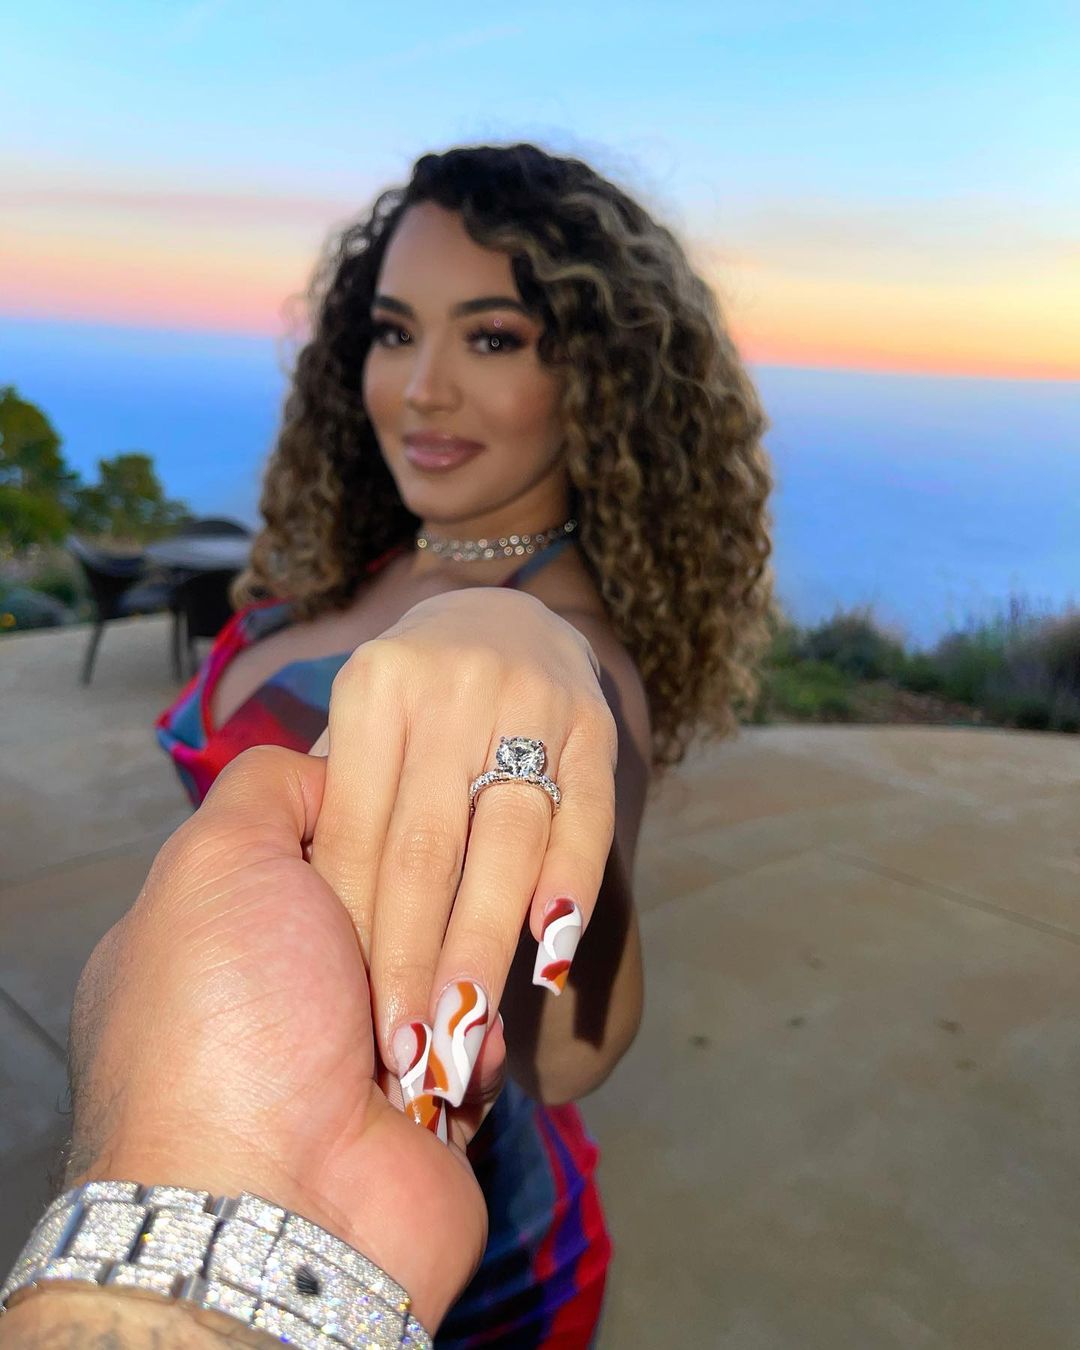 Destiny Rodriguez flaunting her engagement ring